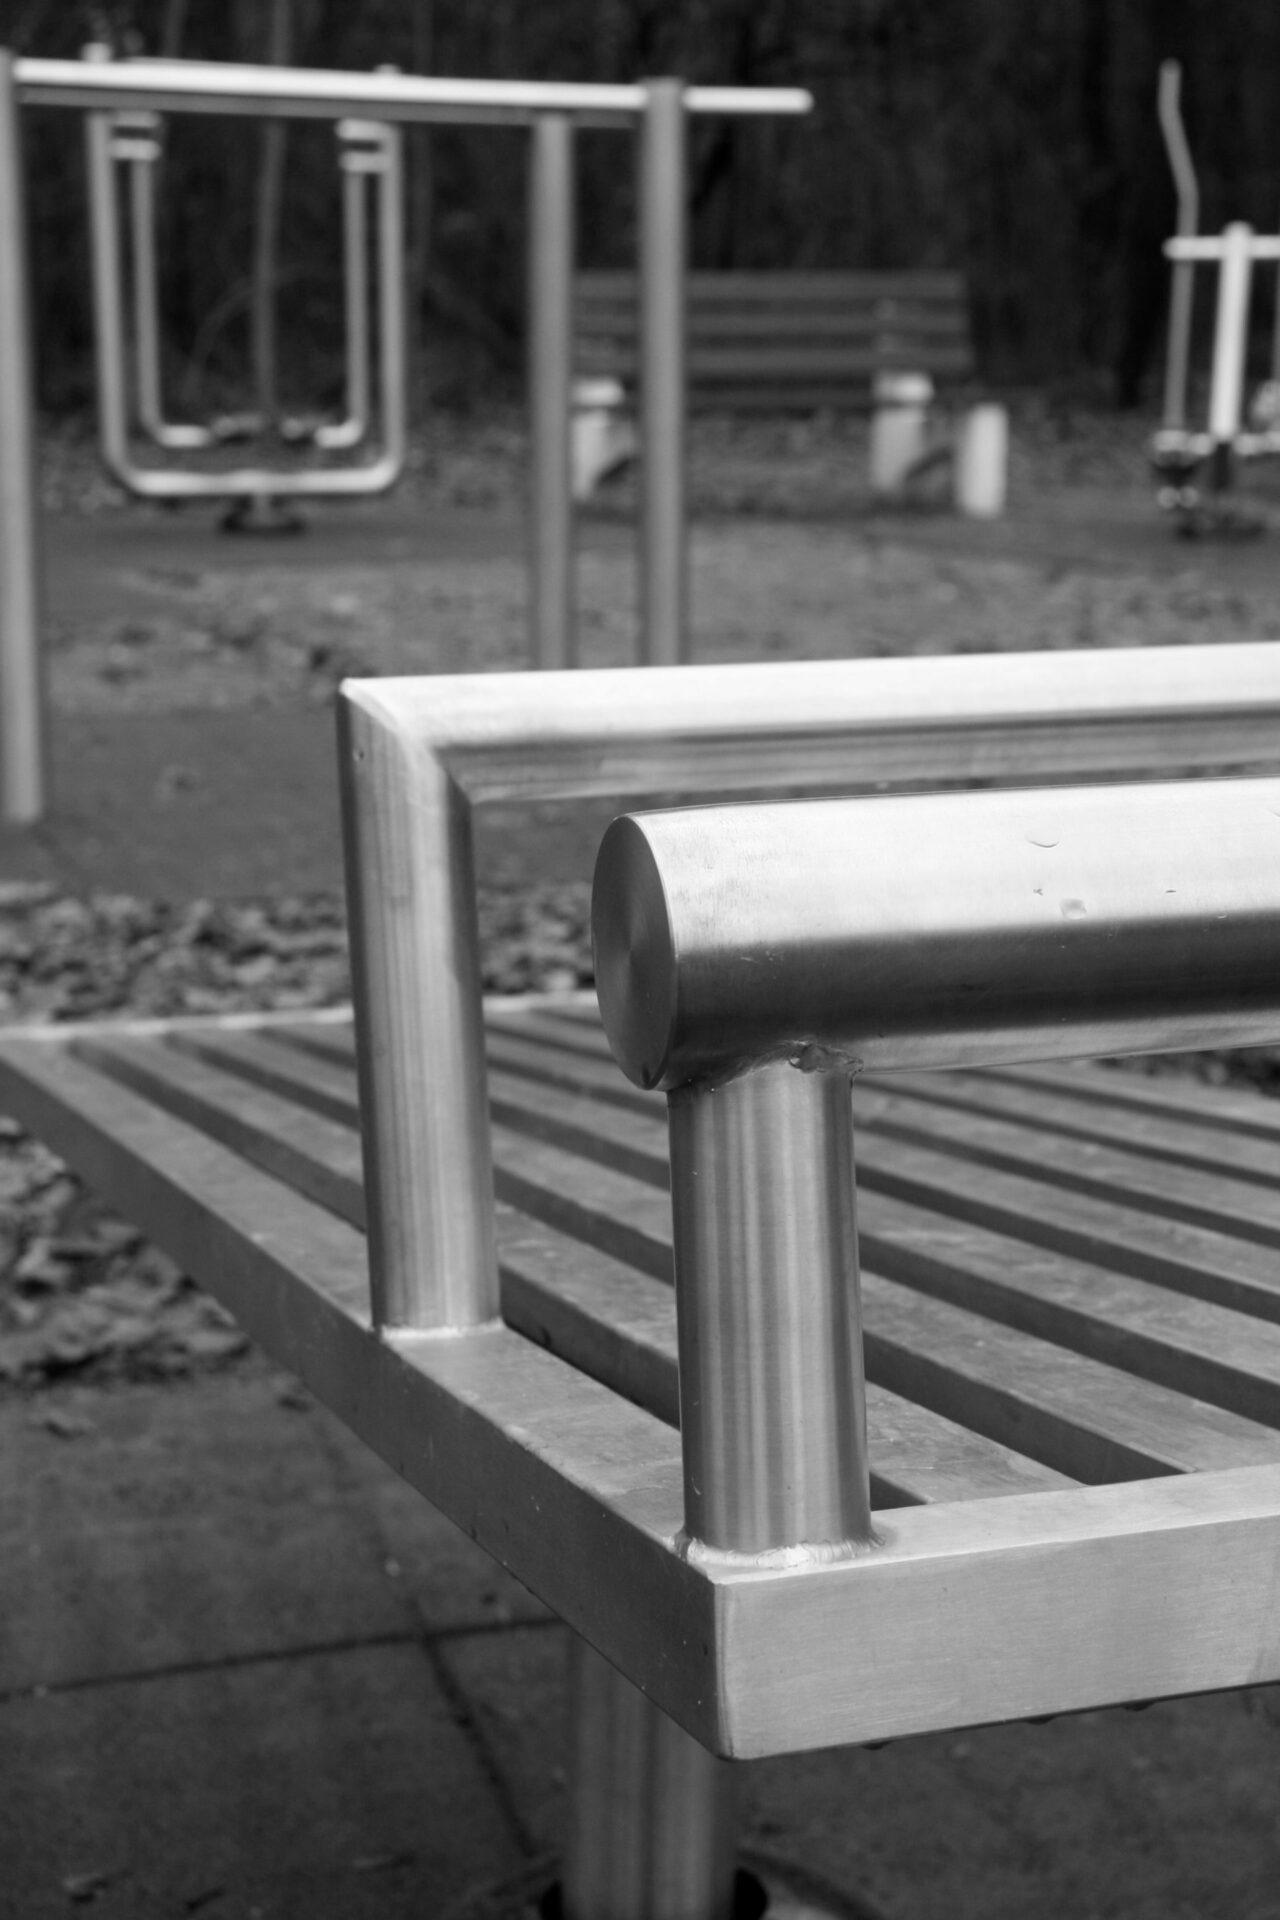 Abdominal bench oblique